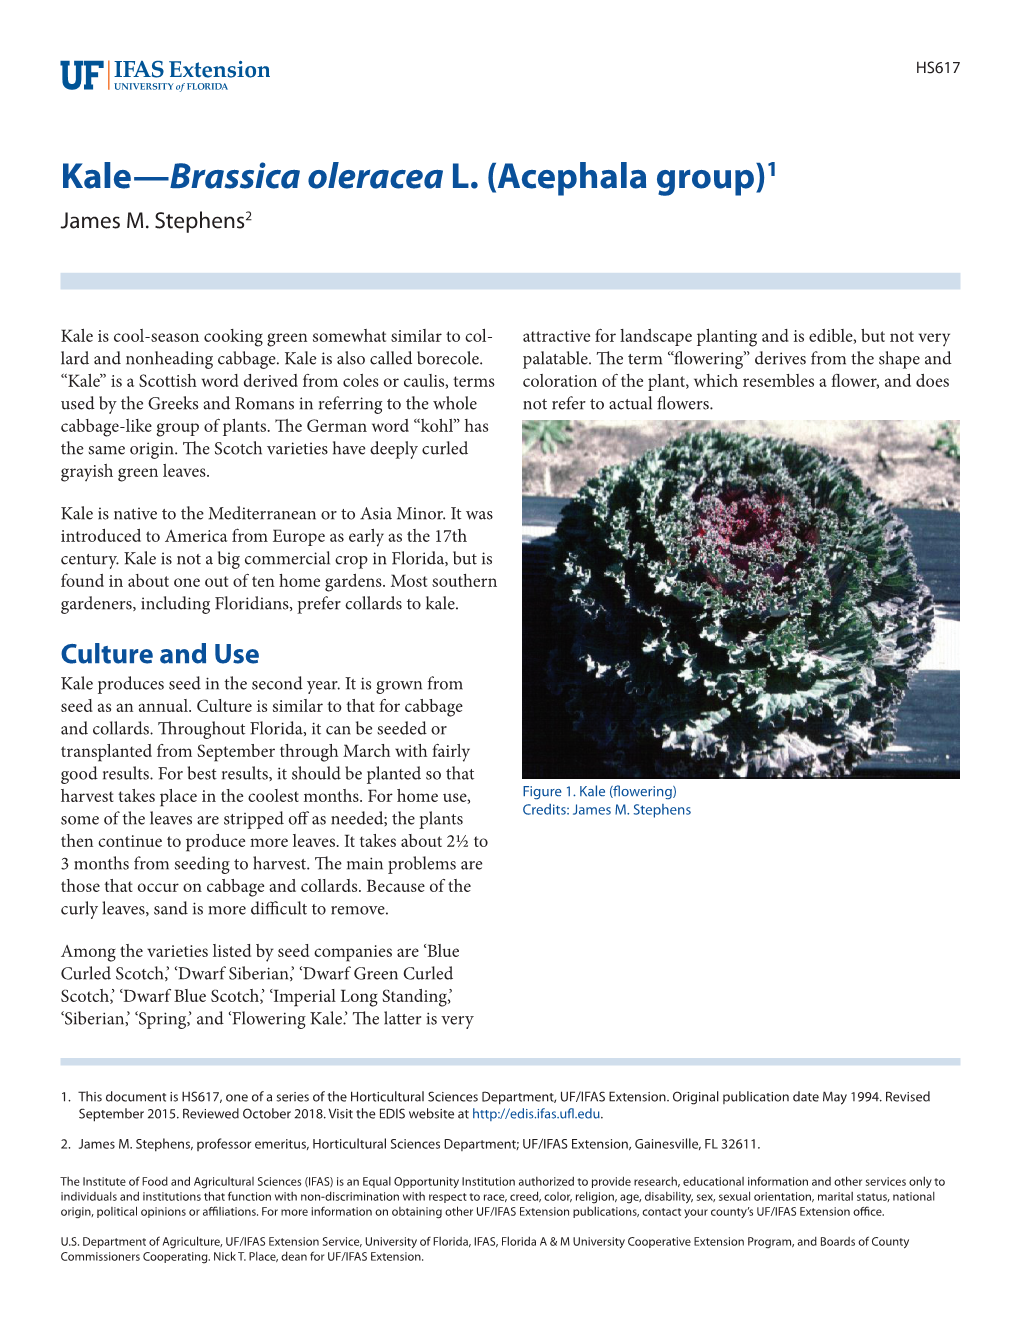 Kale—Brassica Oleracea L. (Acephala Group)1 James M